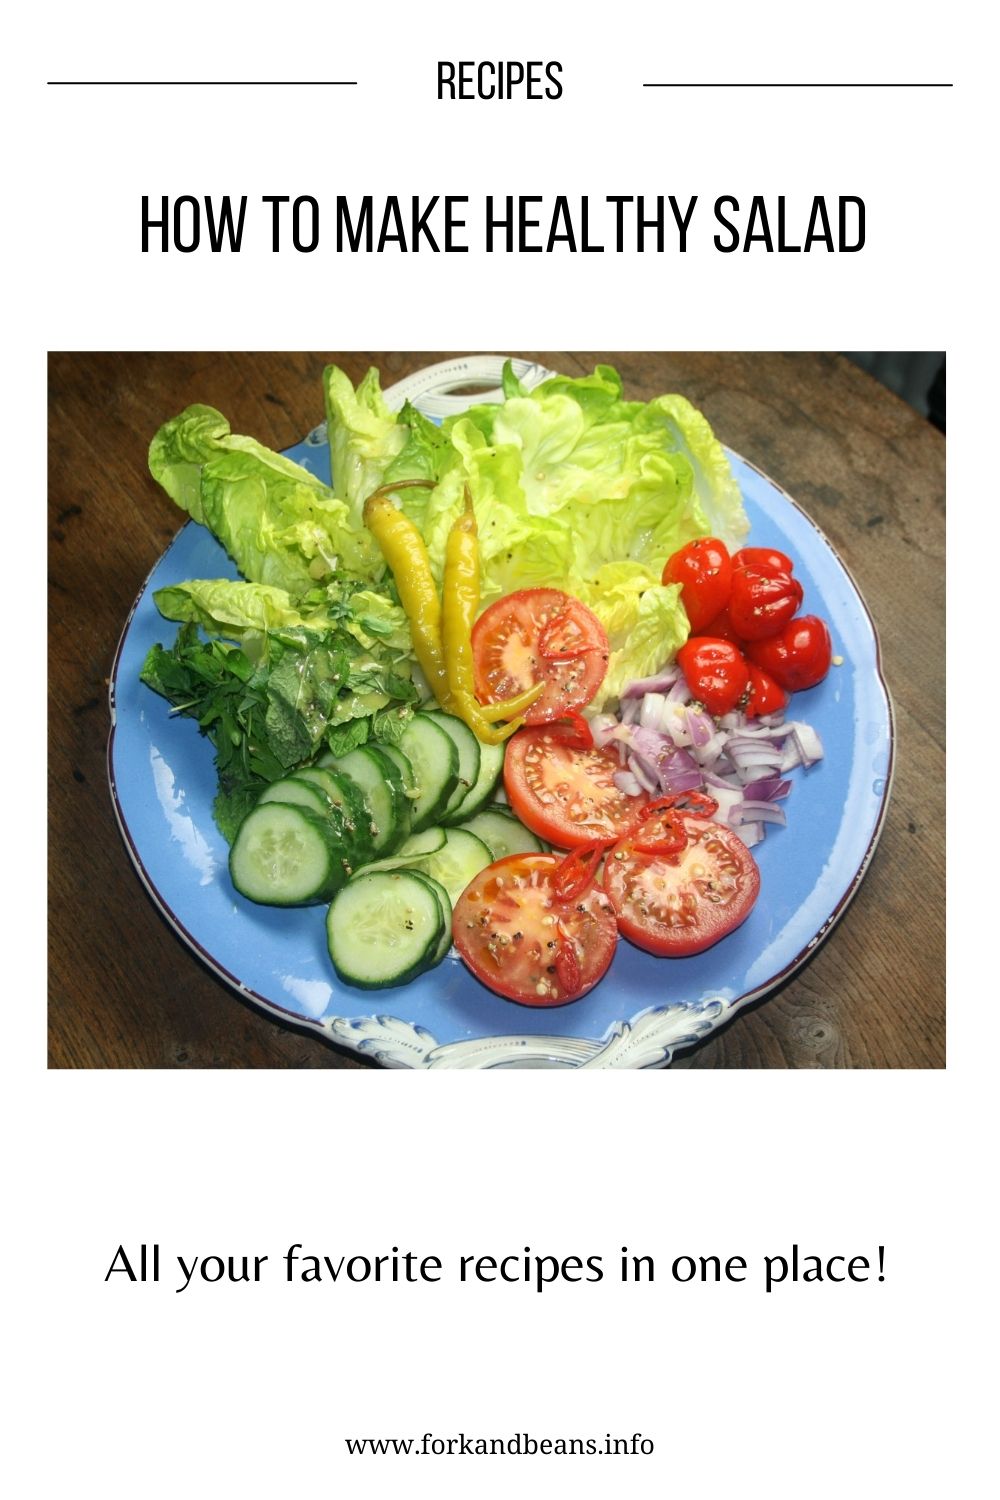 Platter of Salad